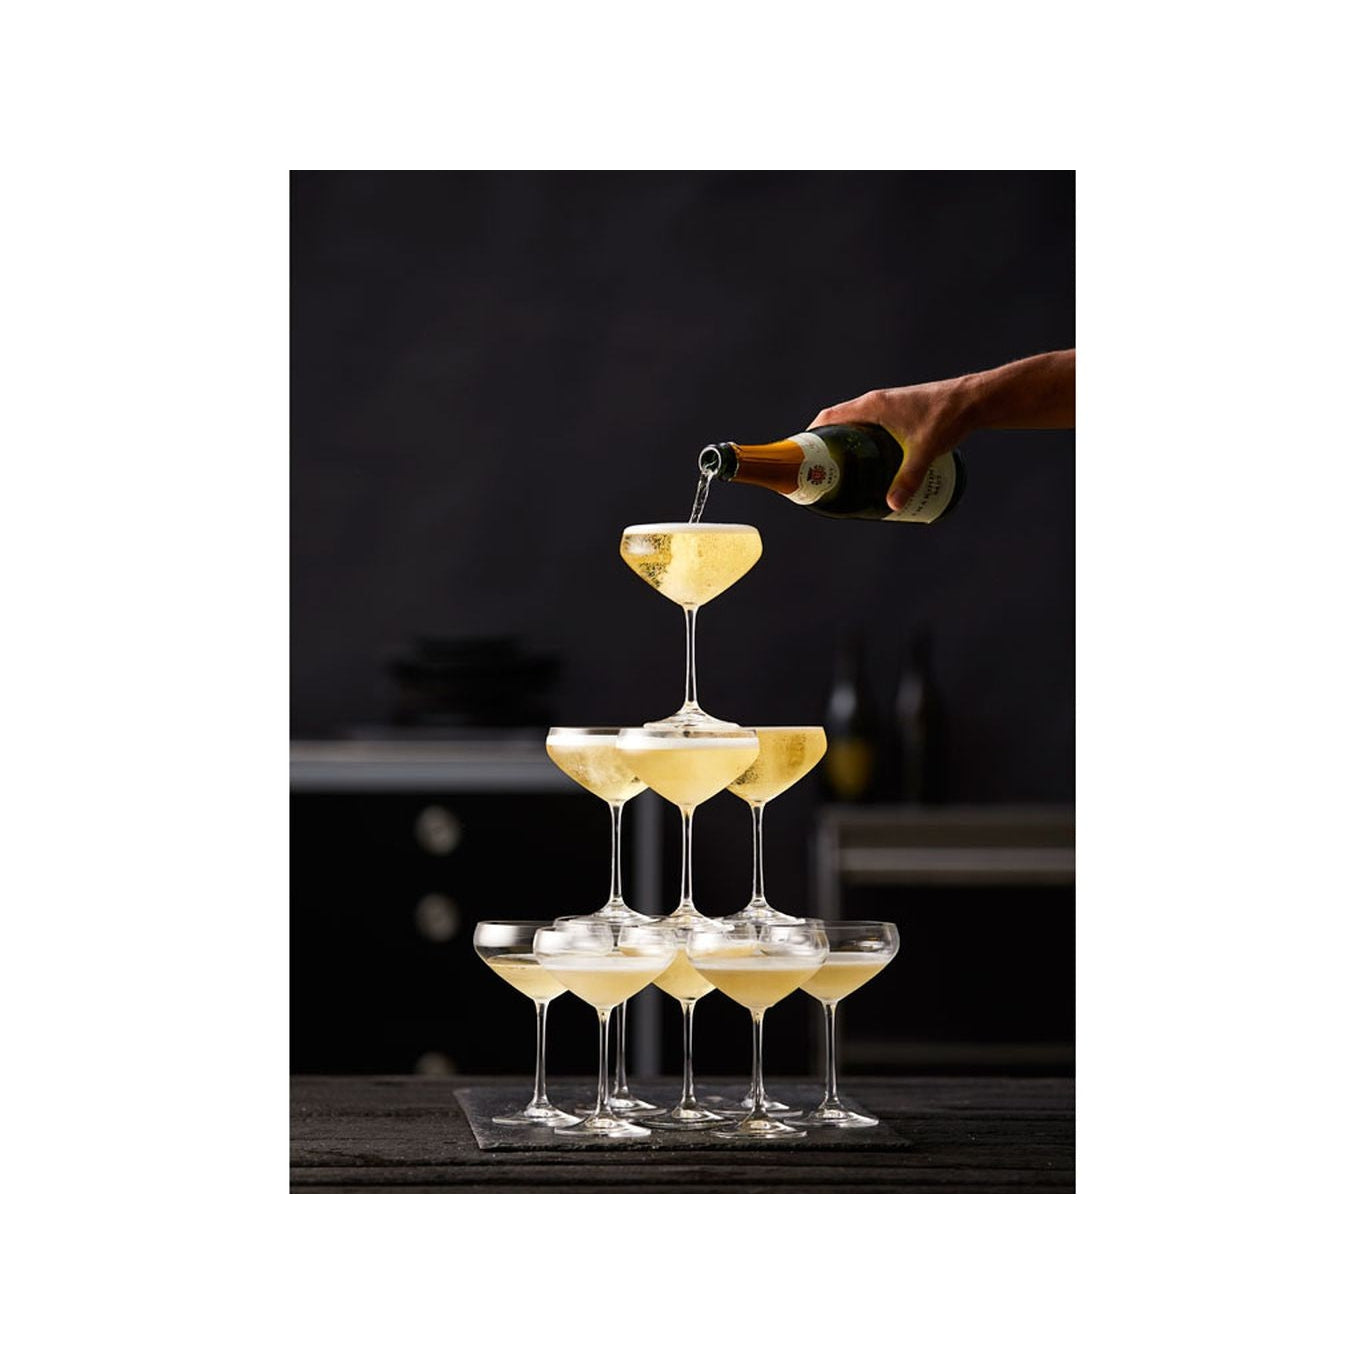 Lyngby Glas Juvel Champagner-Schale 34 Cl, 4 Stück.